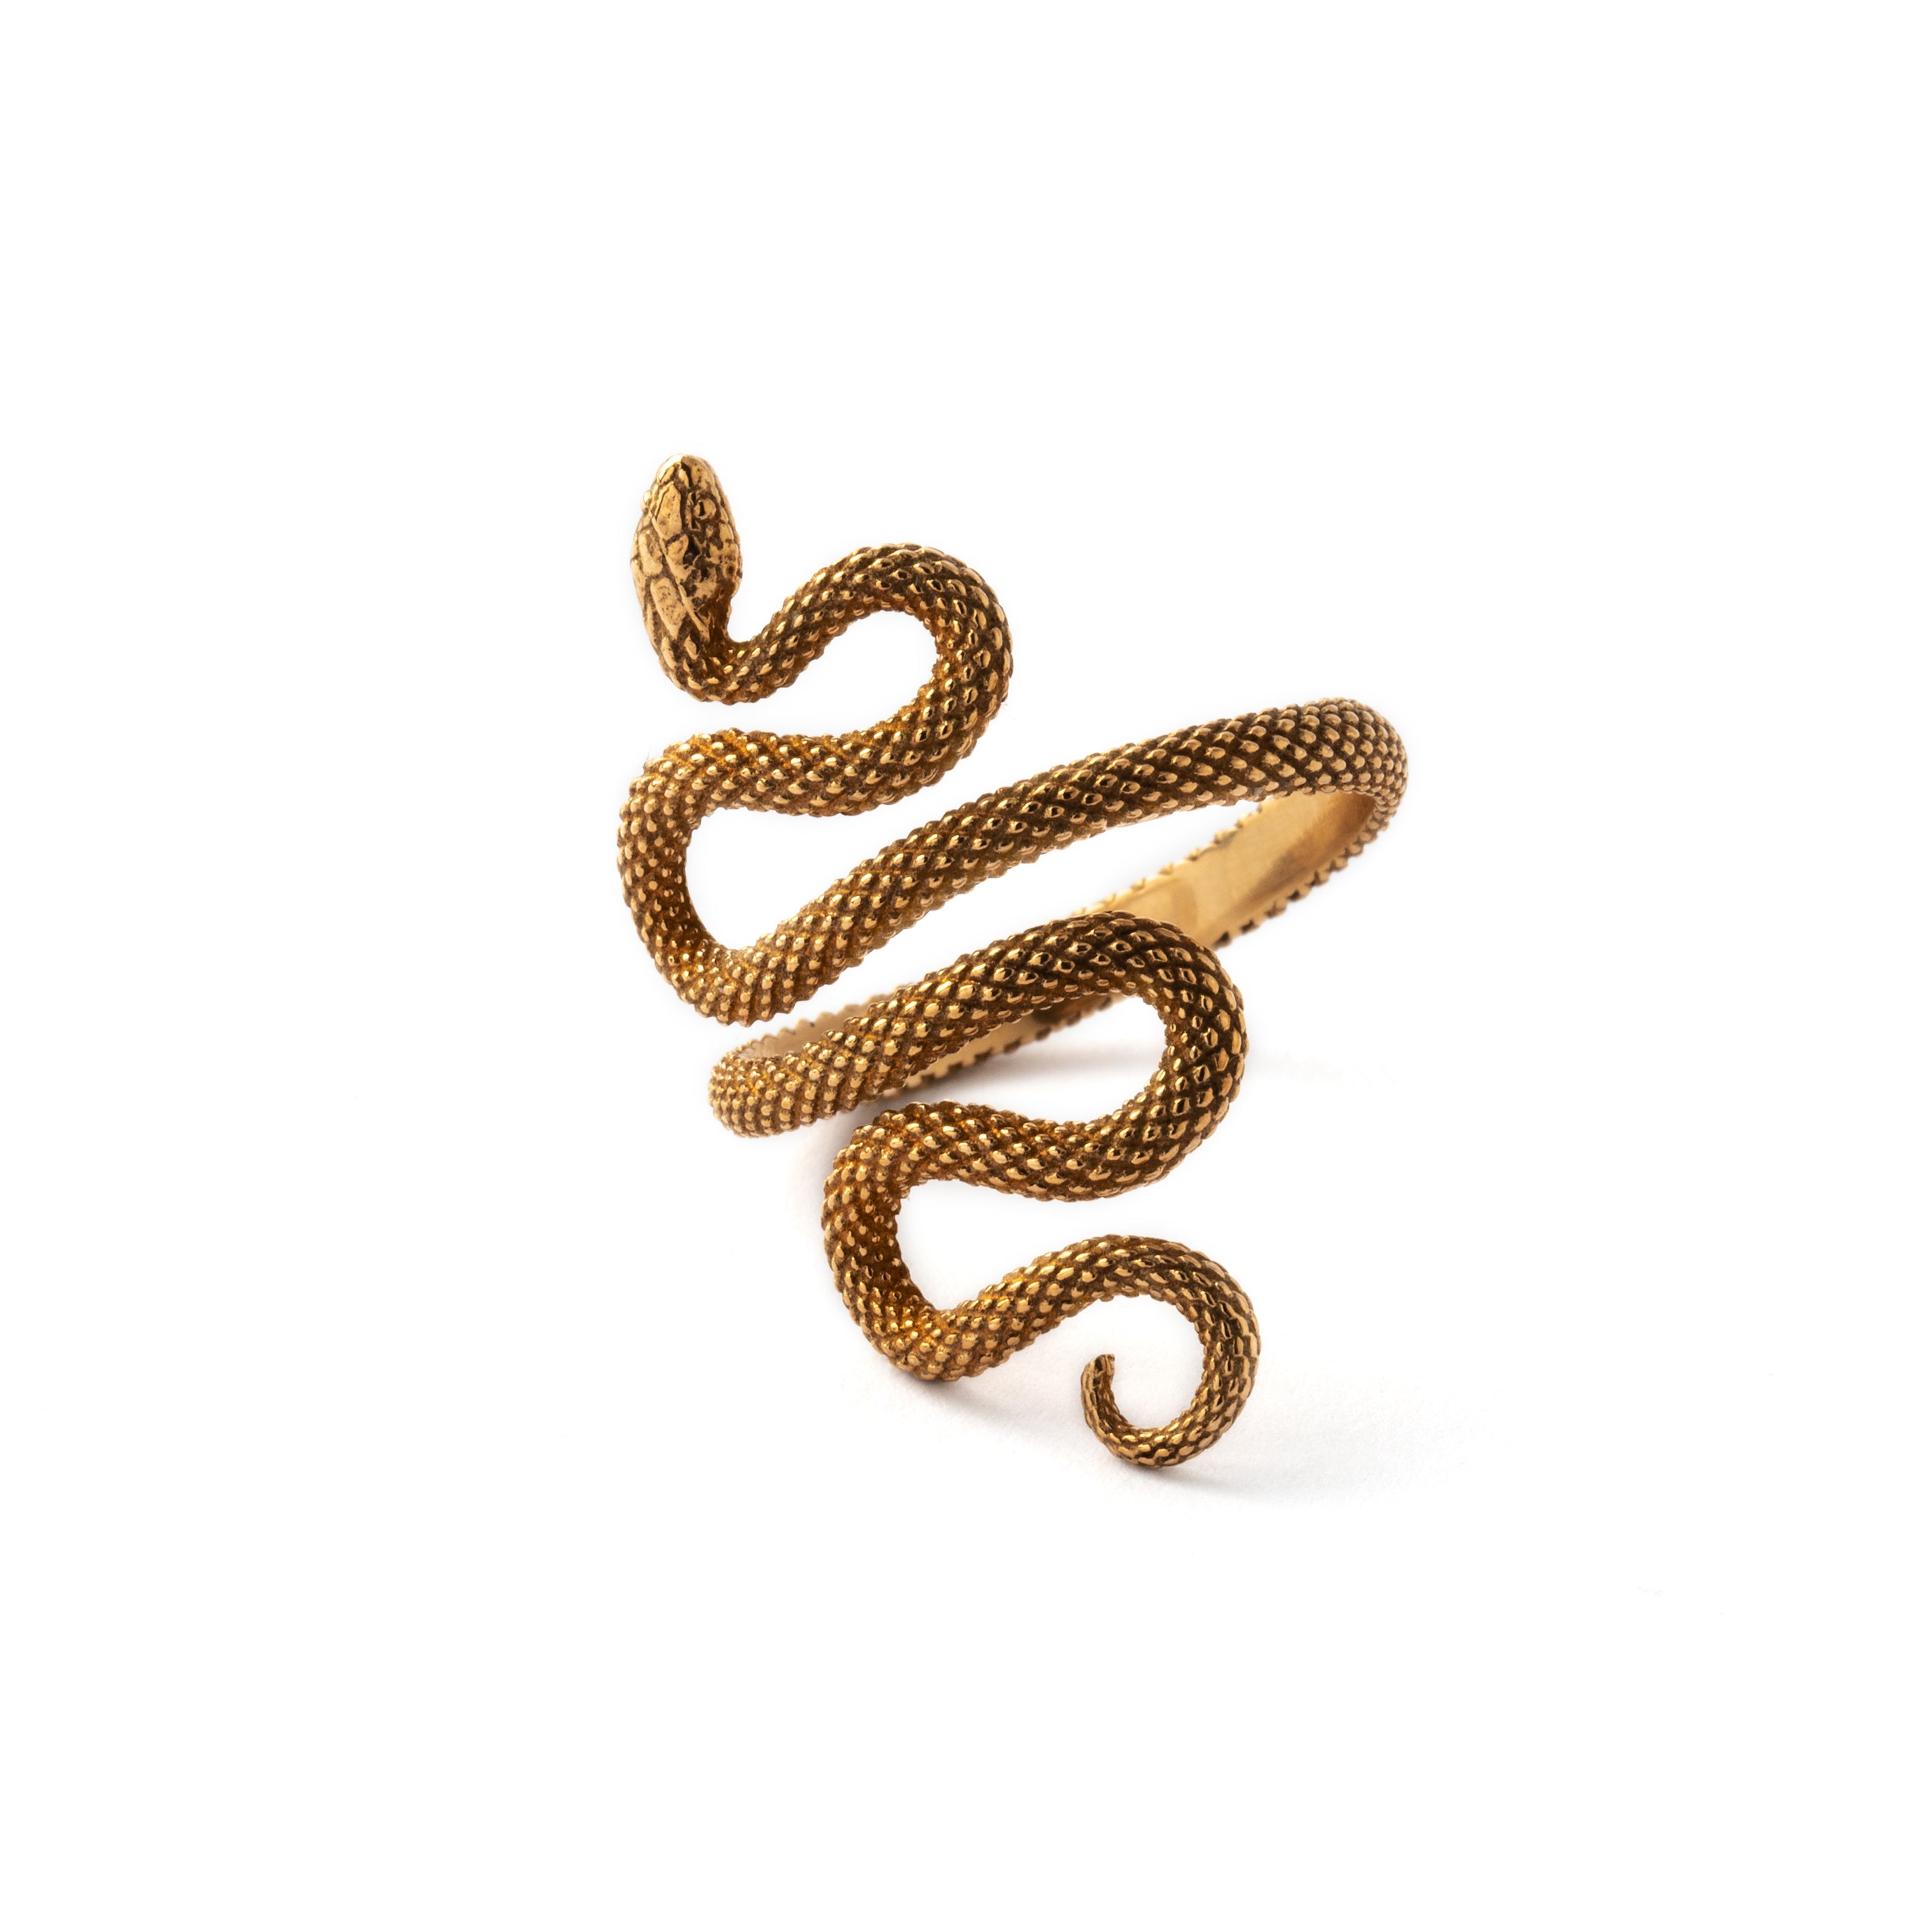 bronze Eden snake adjustable ring right side view